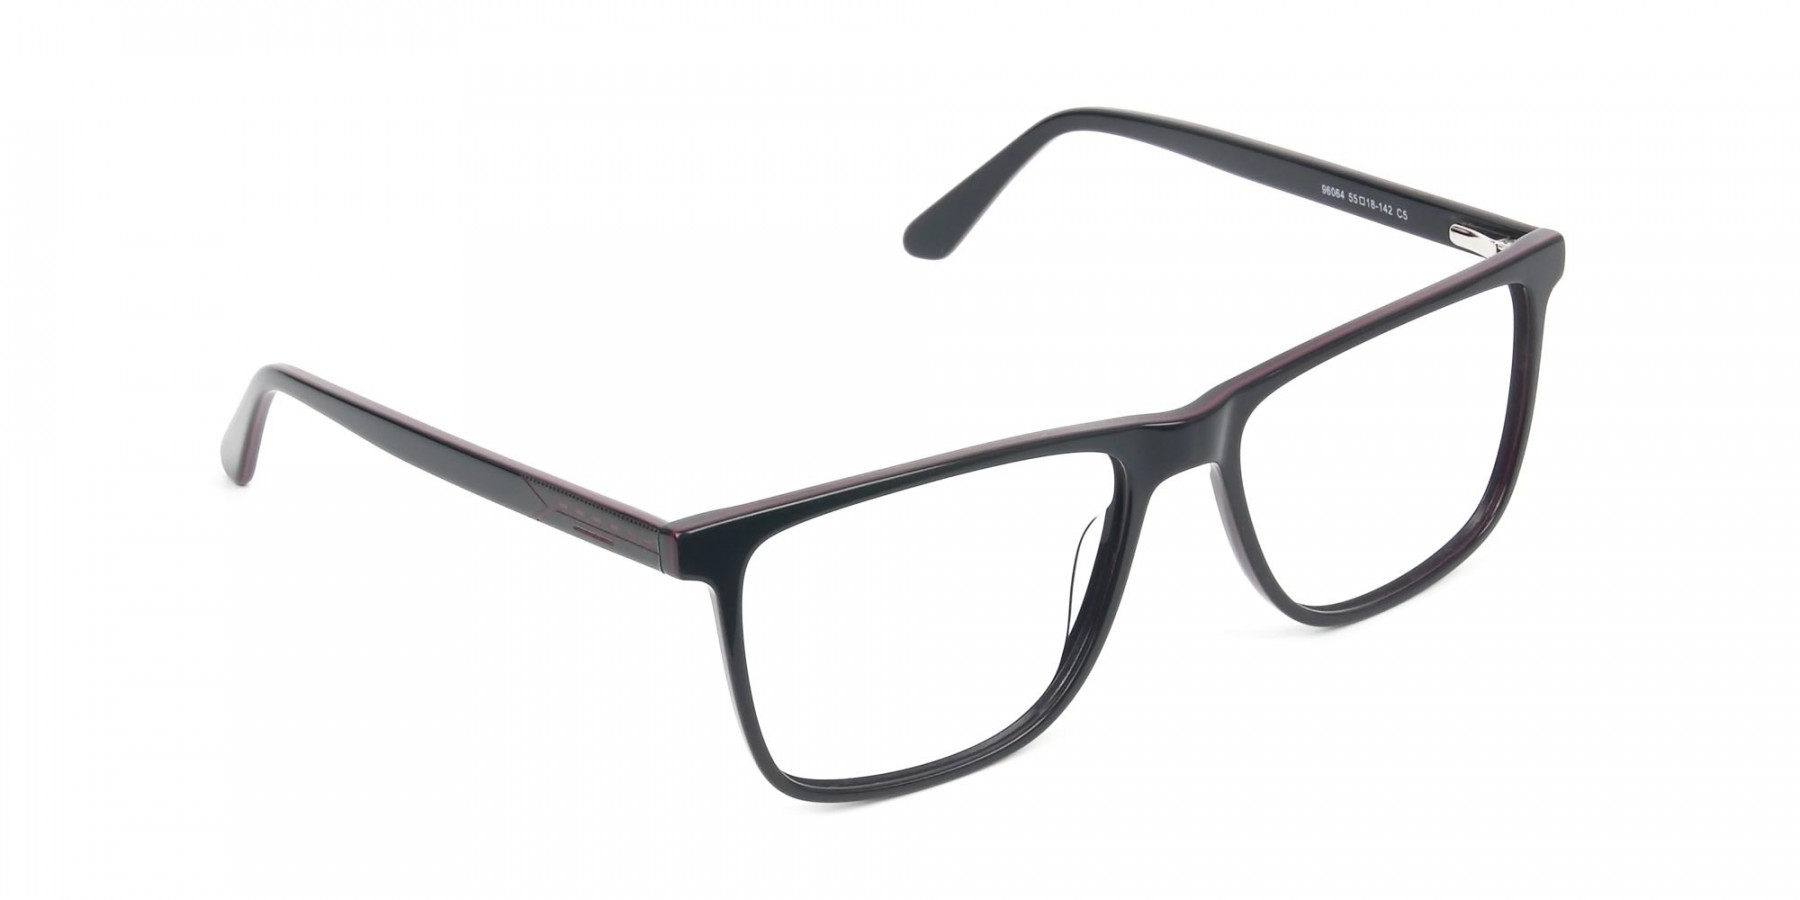 Geek Blue Rectangular Glasses in Acetate - 1